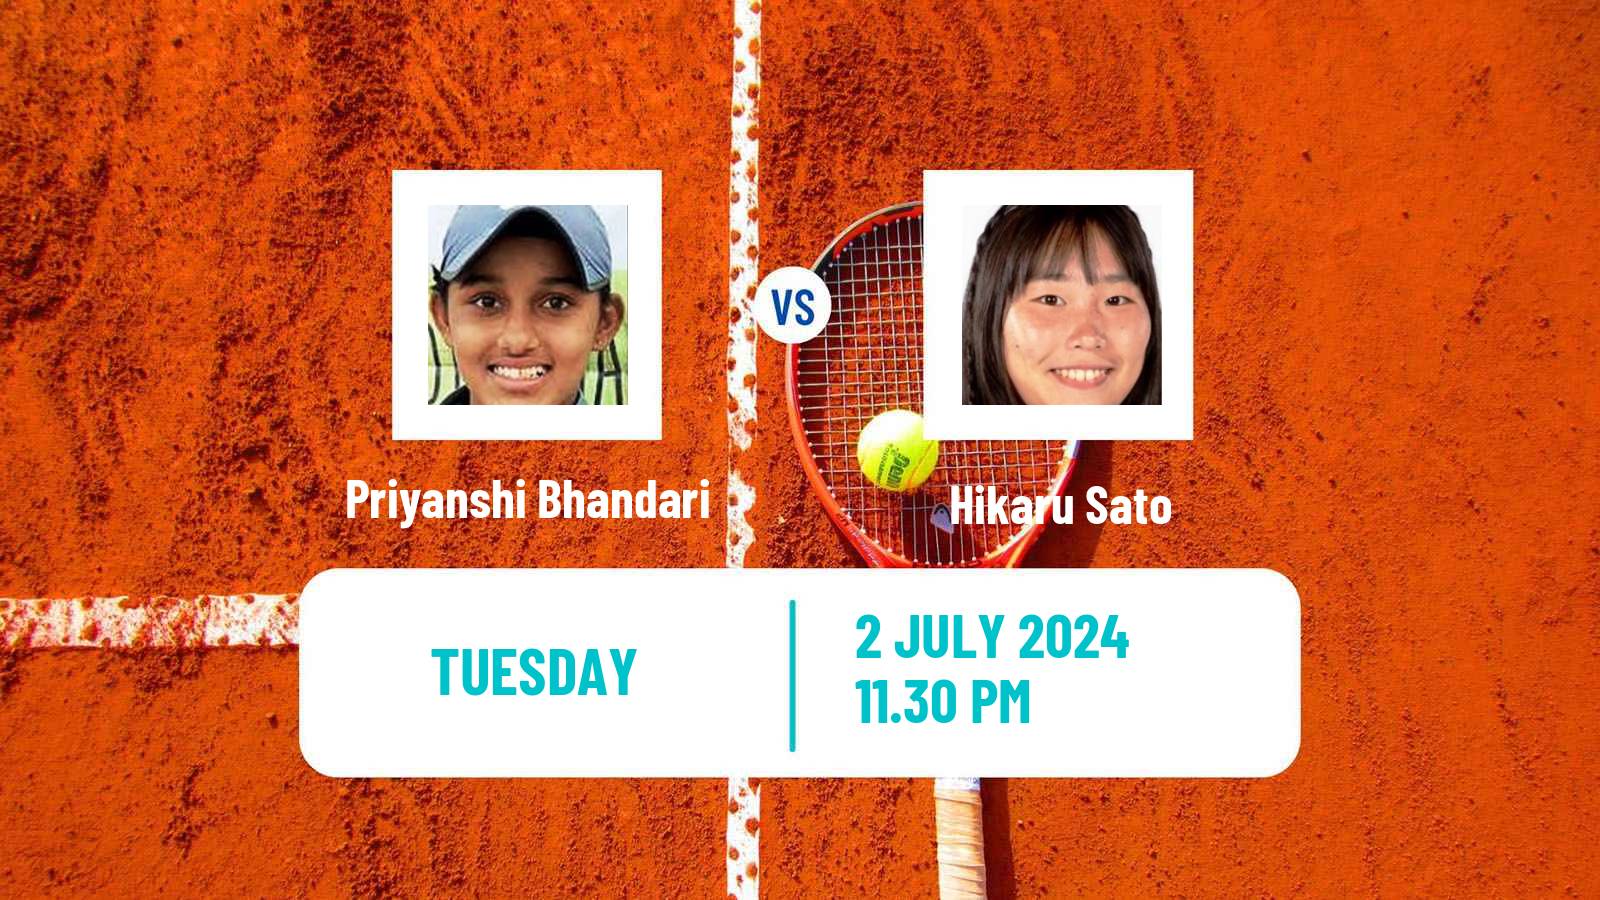 Tennis ITF W35 Nakhon Si Thammarat 2 Women Priyanshi Bhandari - Hikaru Sato